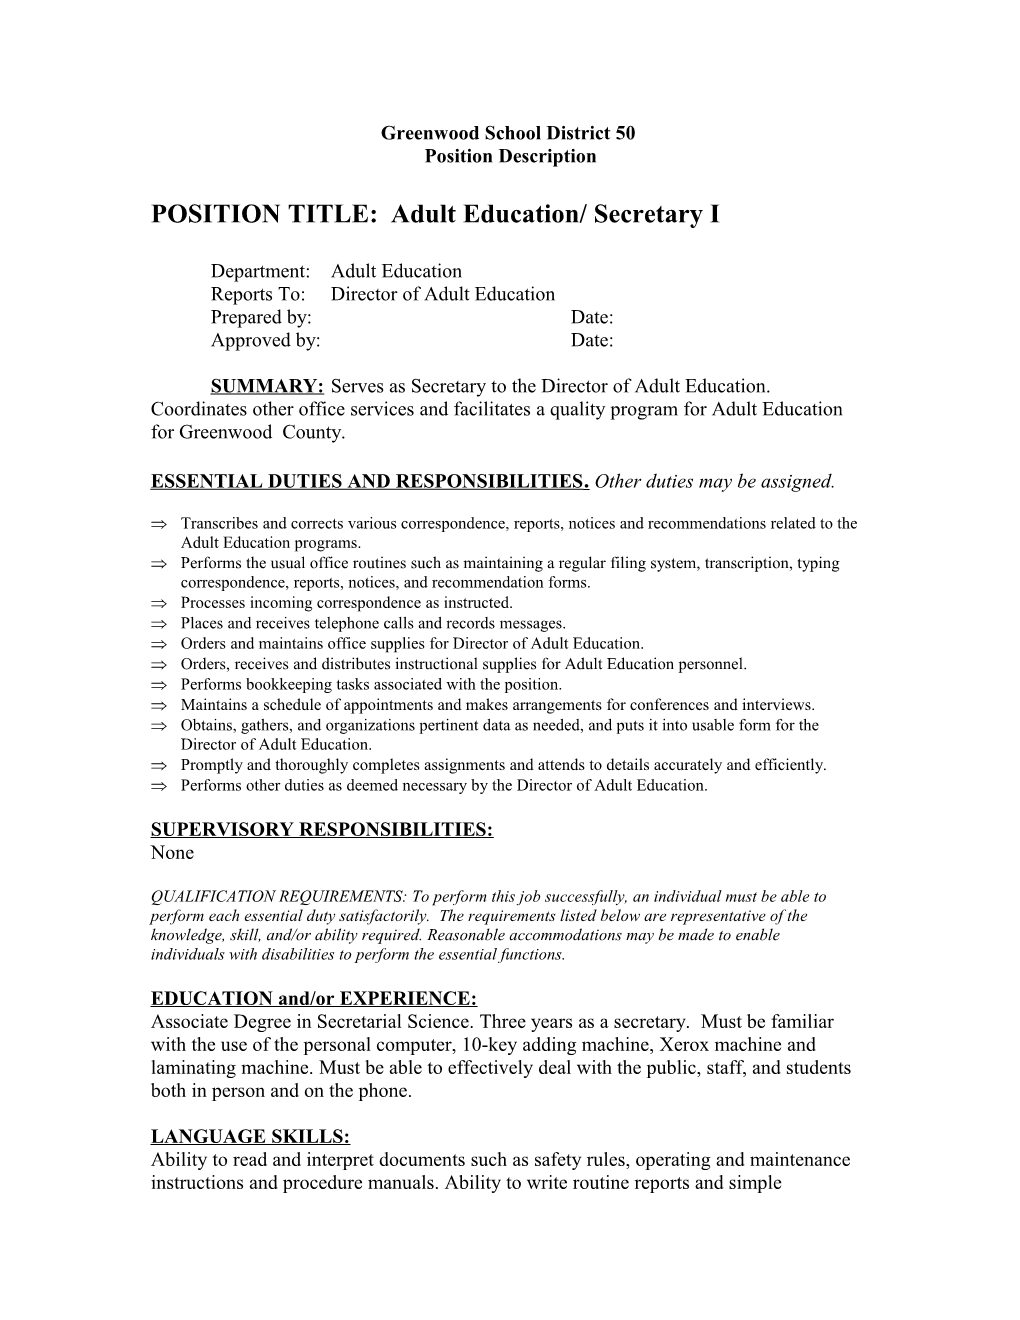 Greenwood School District 50 Position Description